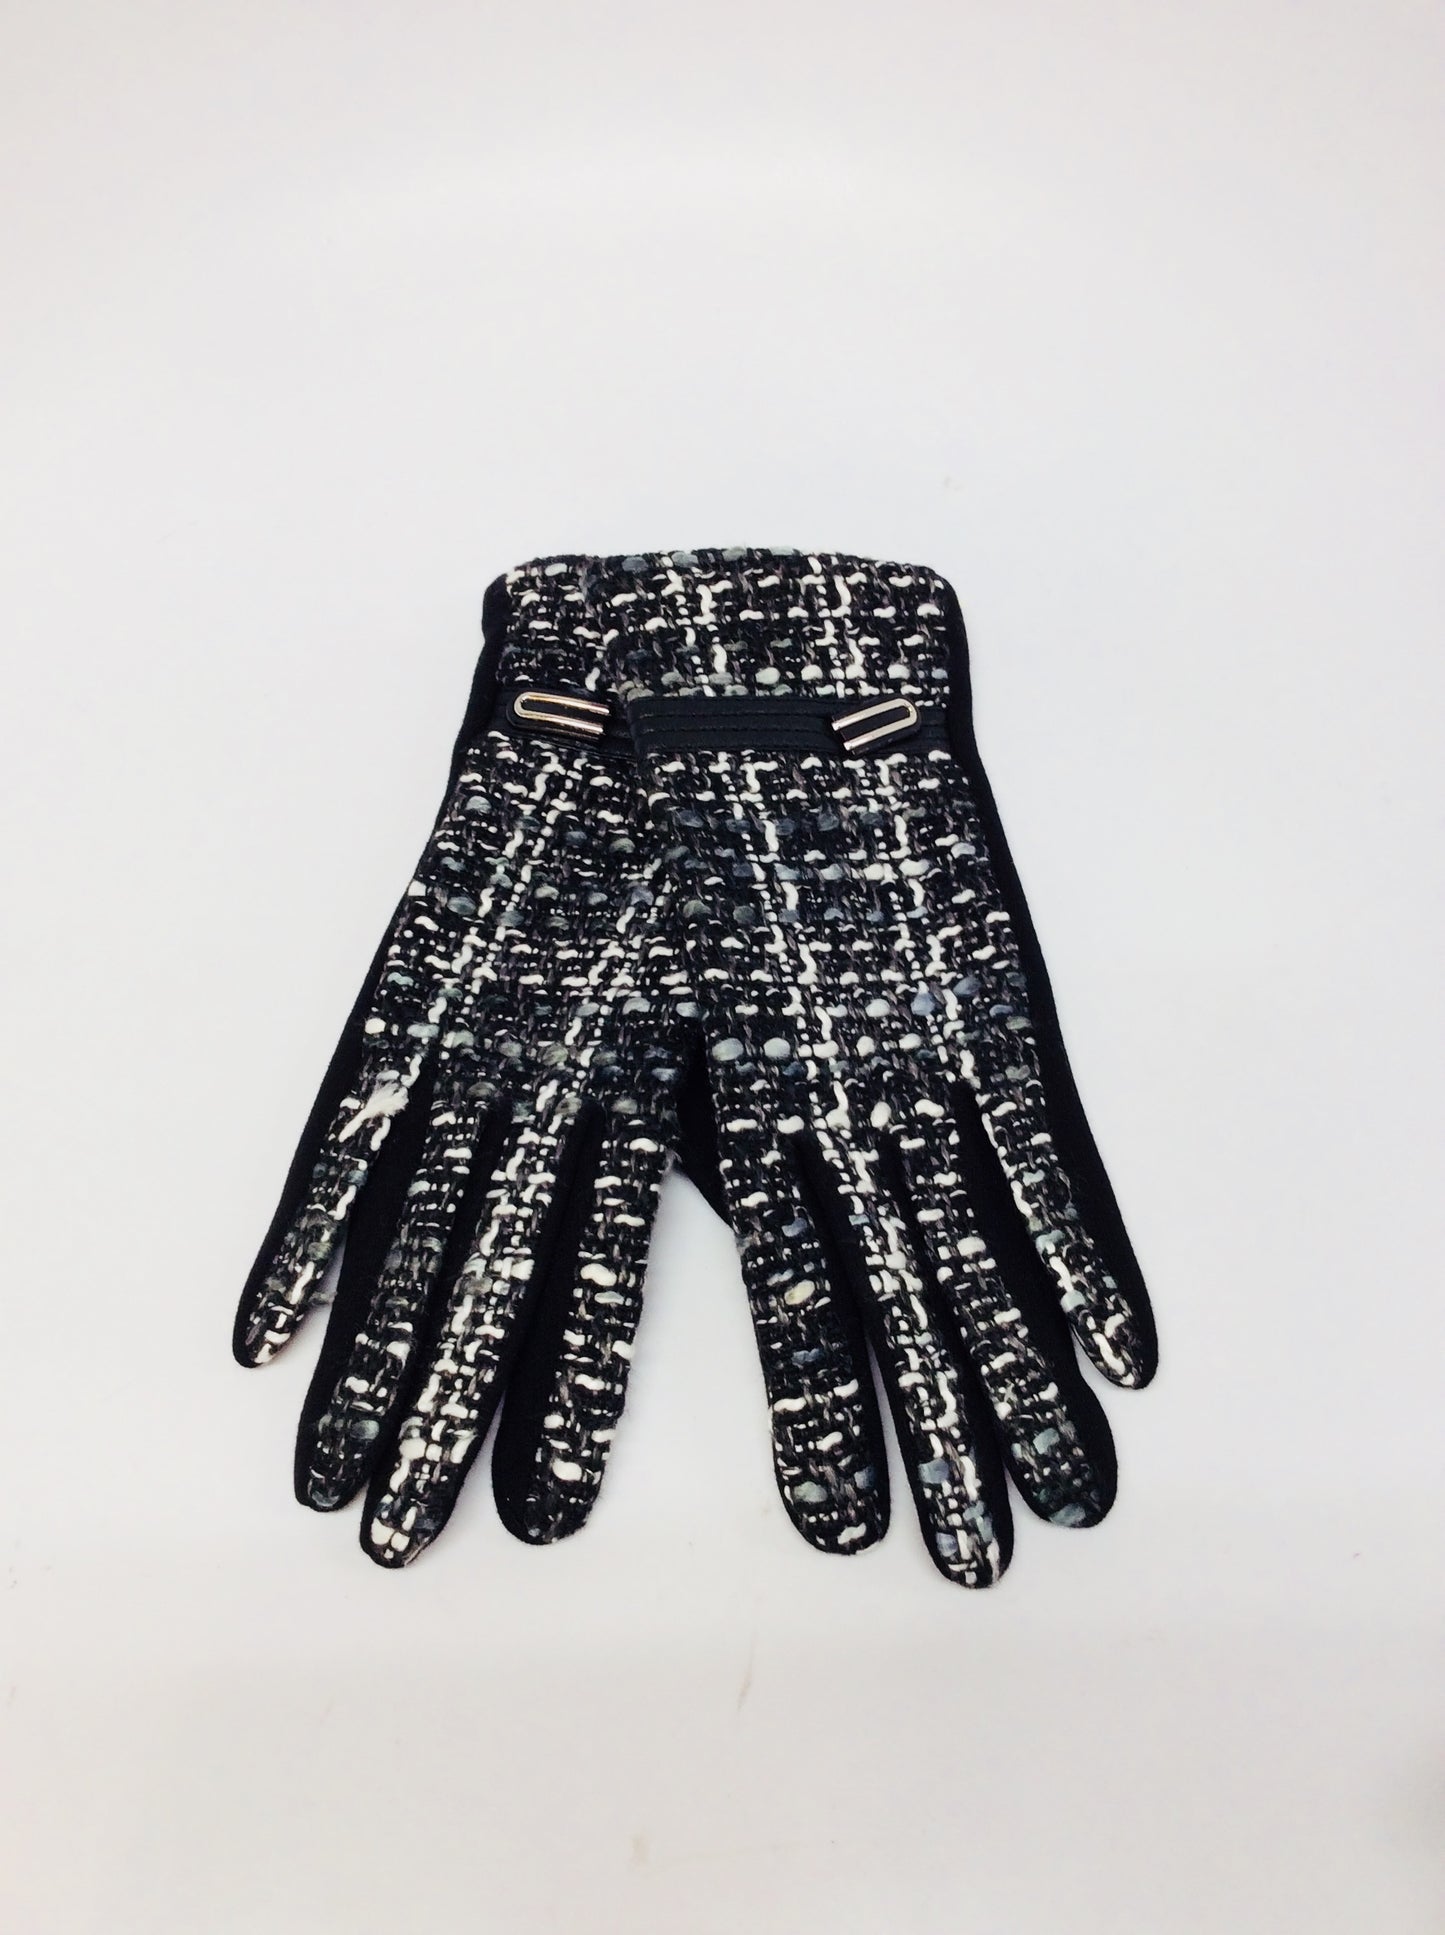 Black and White Glove #89-93109